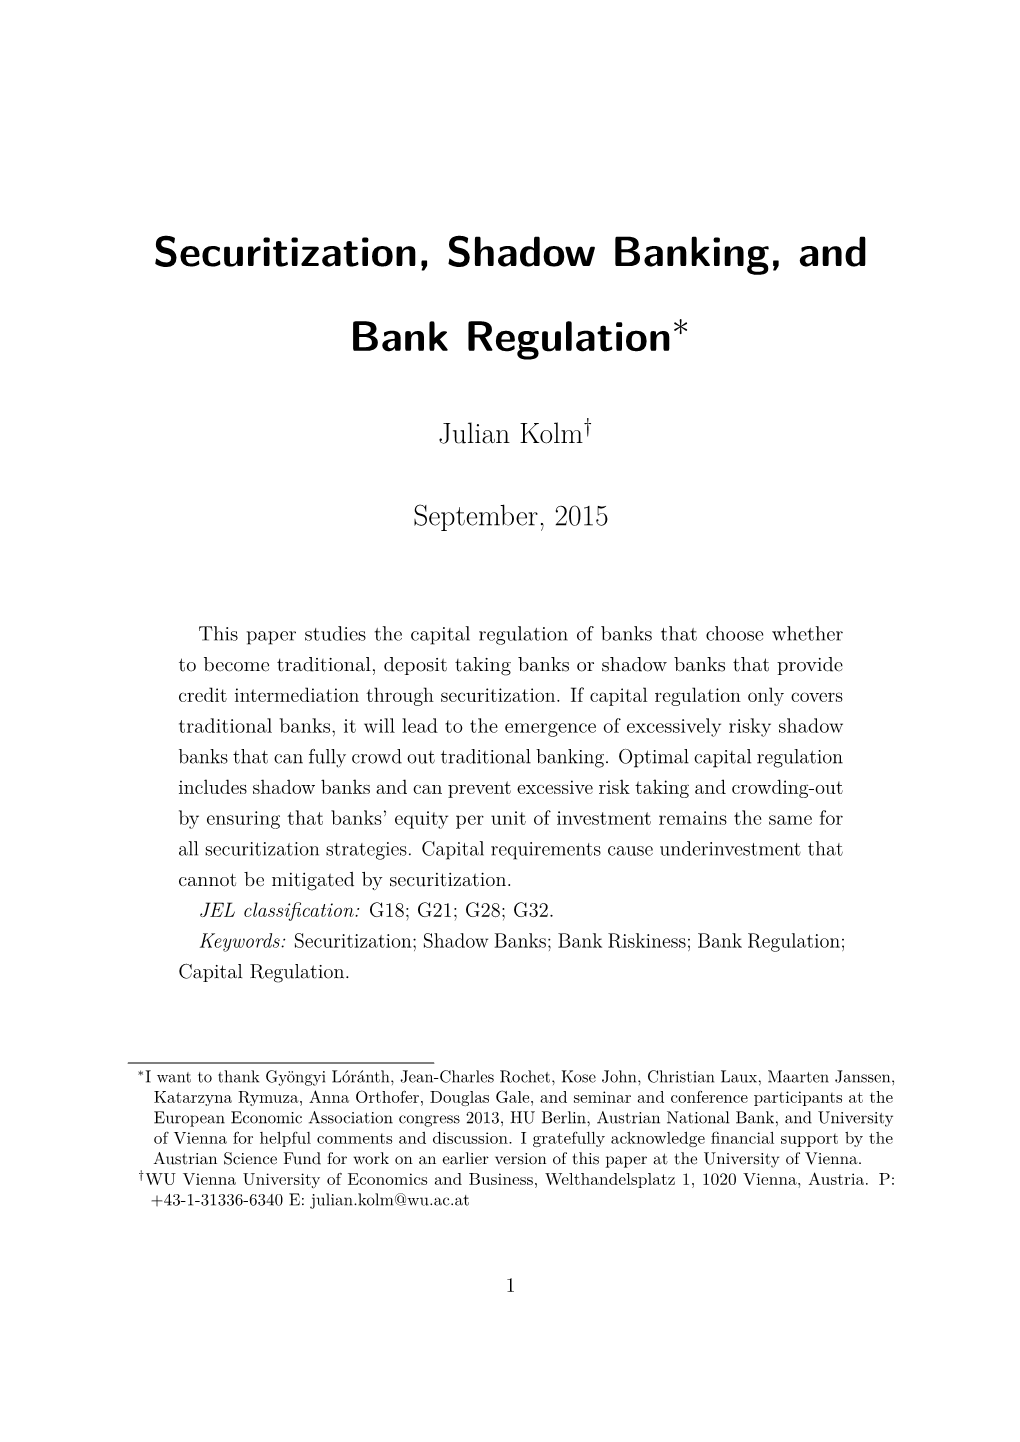 Securitization, Shadow Banking, and Bank Regulation